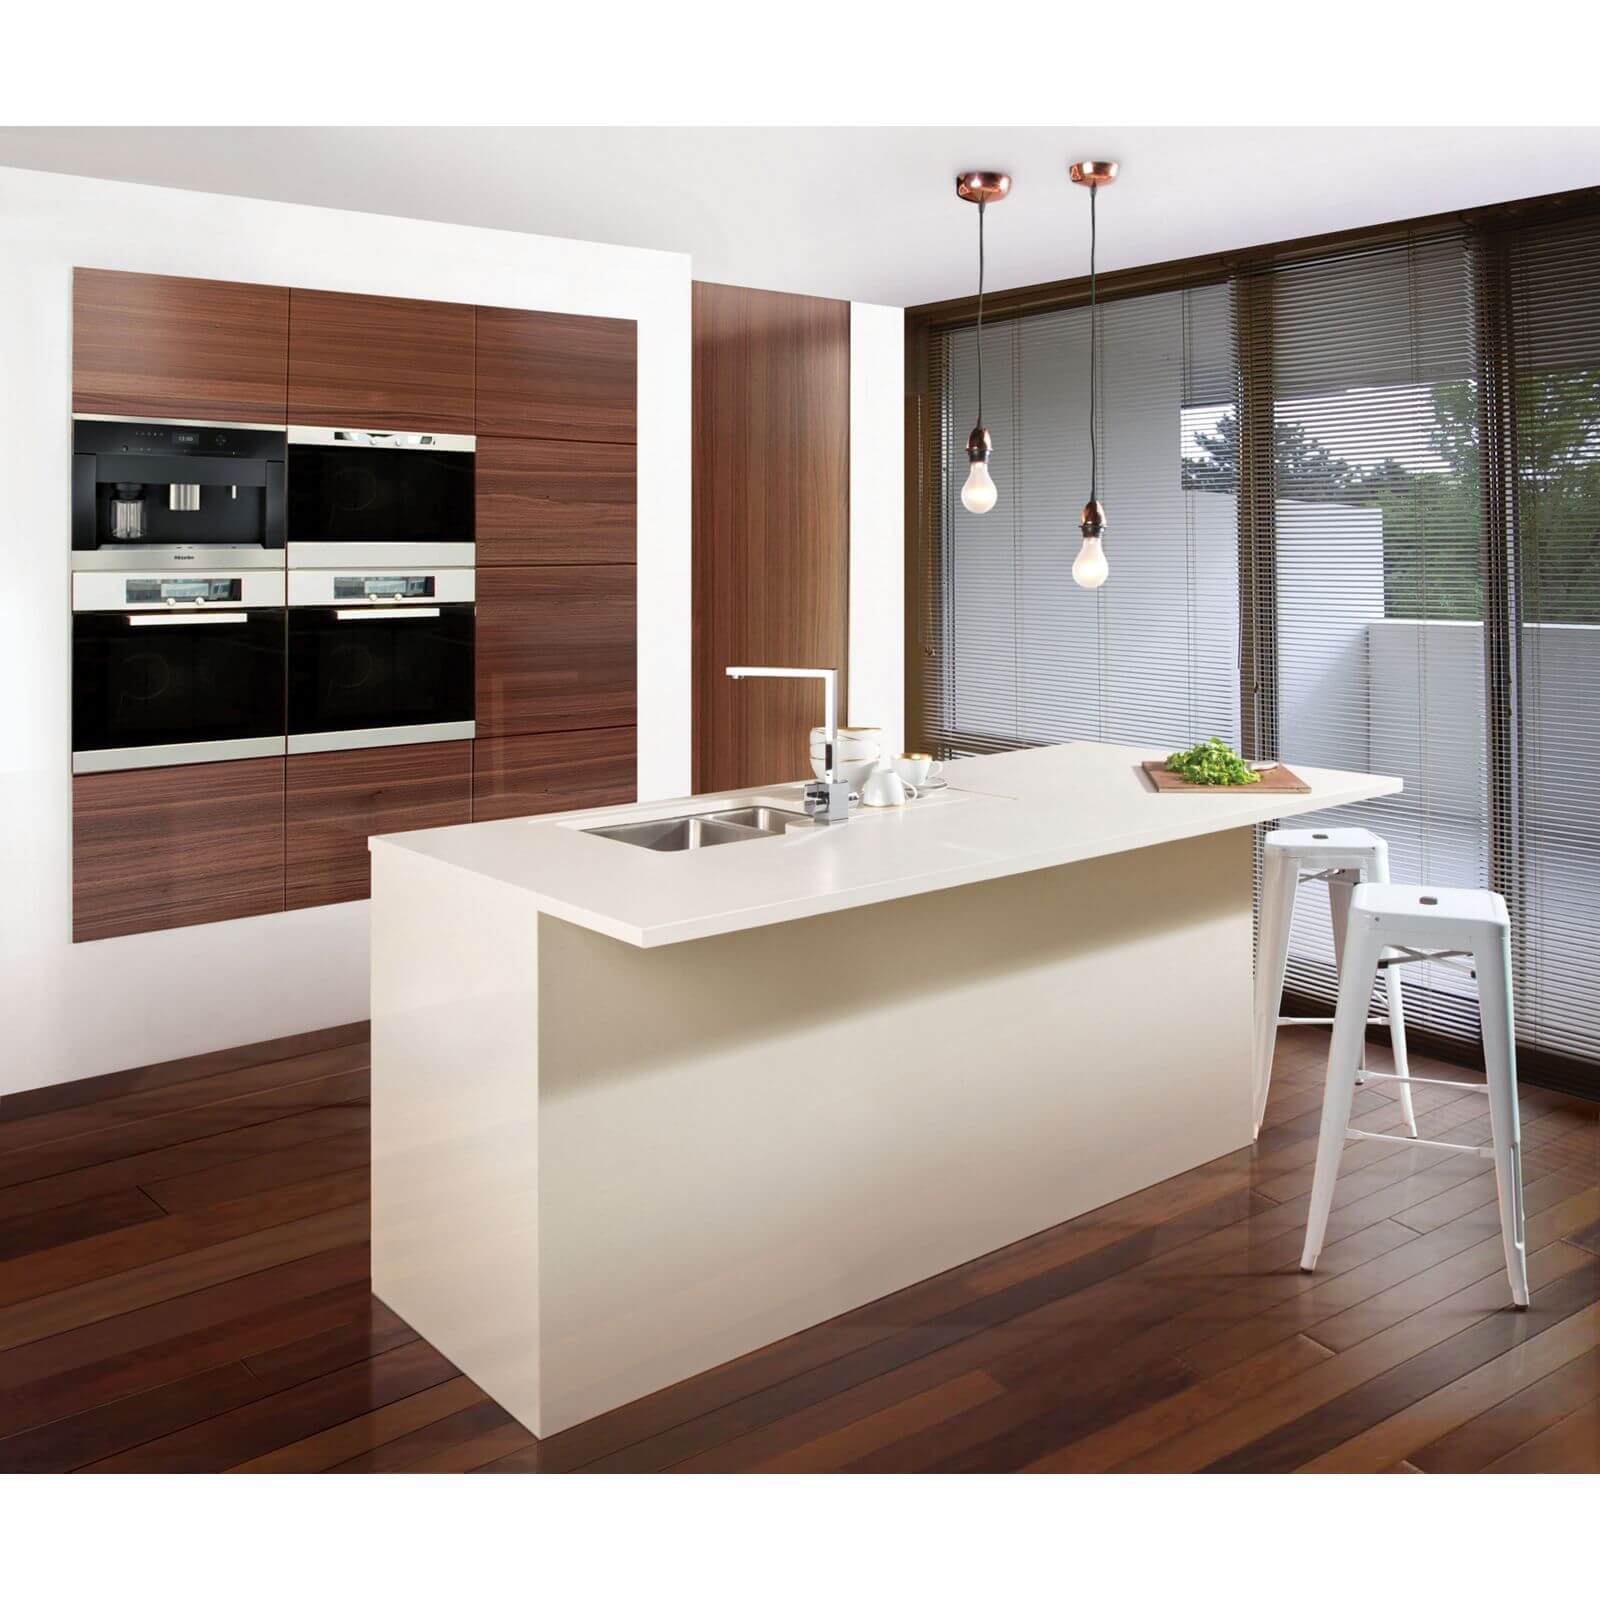 Maia Fossil Kitchen Sink Worktop - Universal Bowl - 3600 x 600 x 42mm